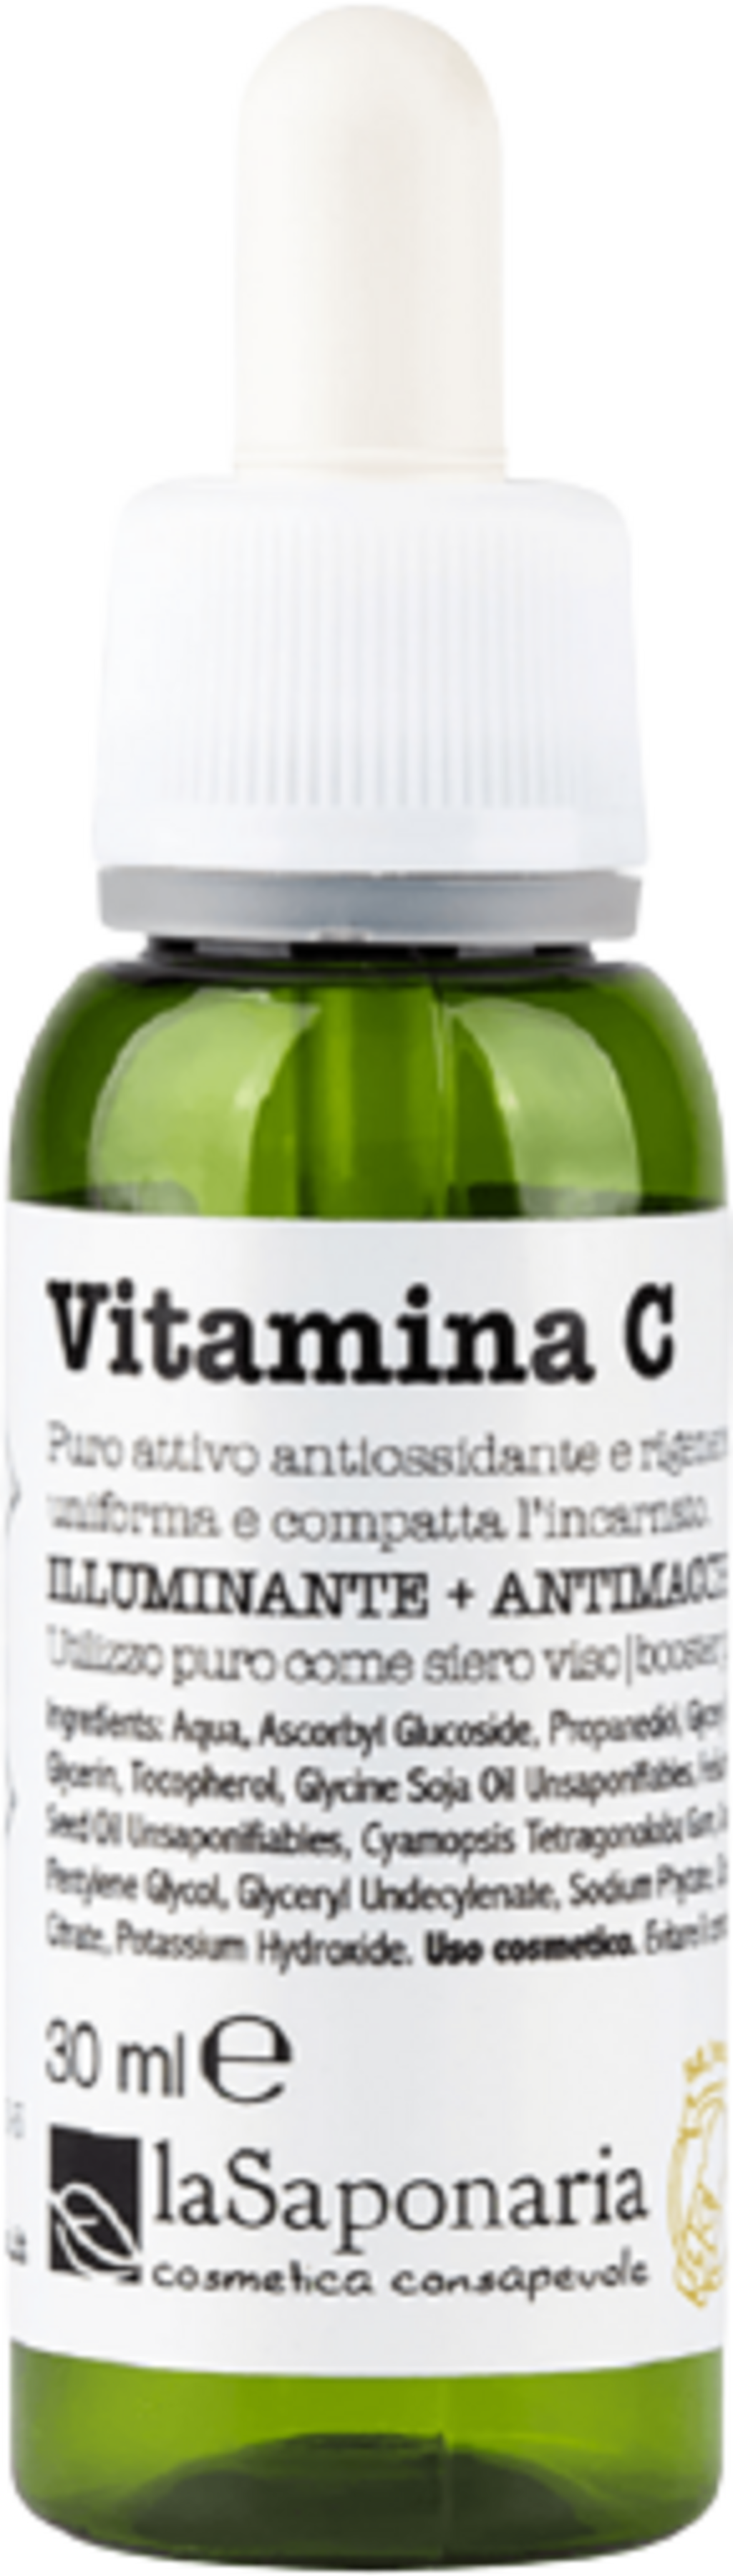 La Saponaria Vitamin C - 30 ml